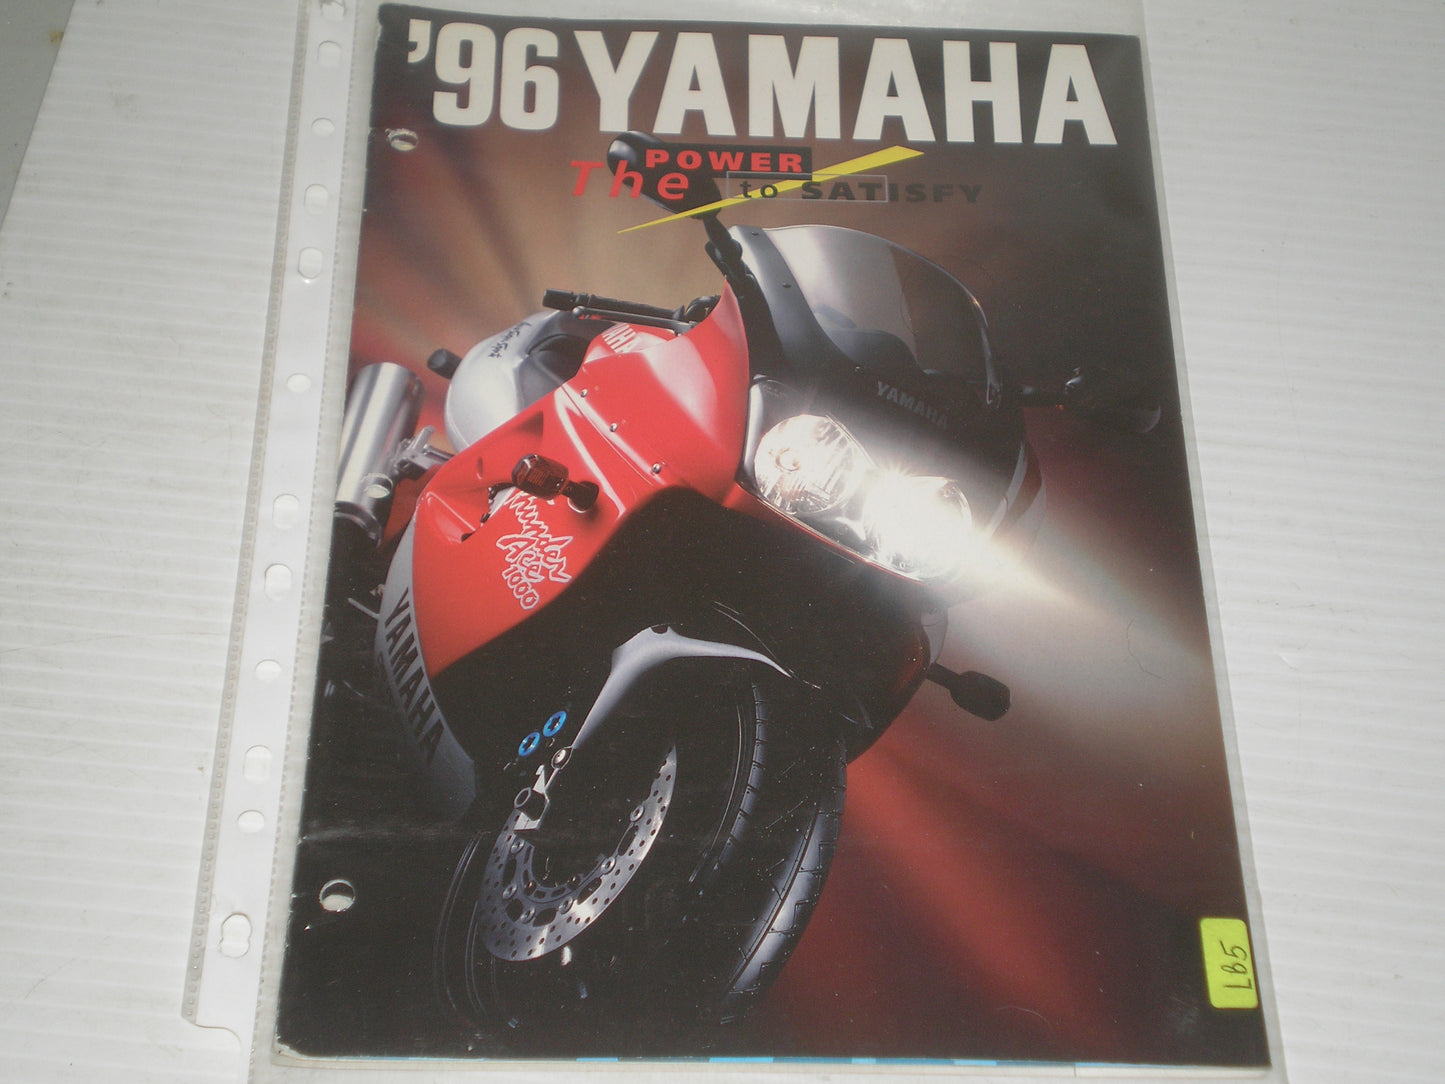 YAMAHA  1996 MOTORCYCLE MODELS SALES BROCHURE  LB5